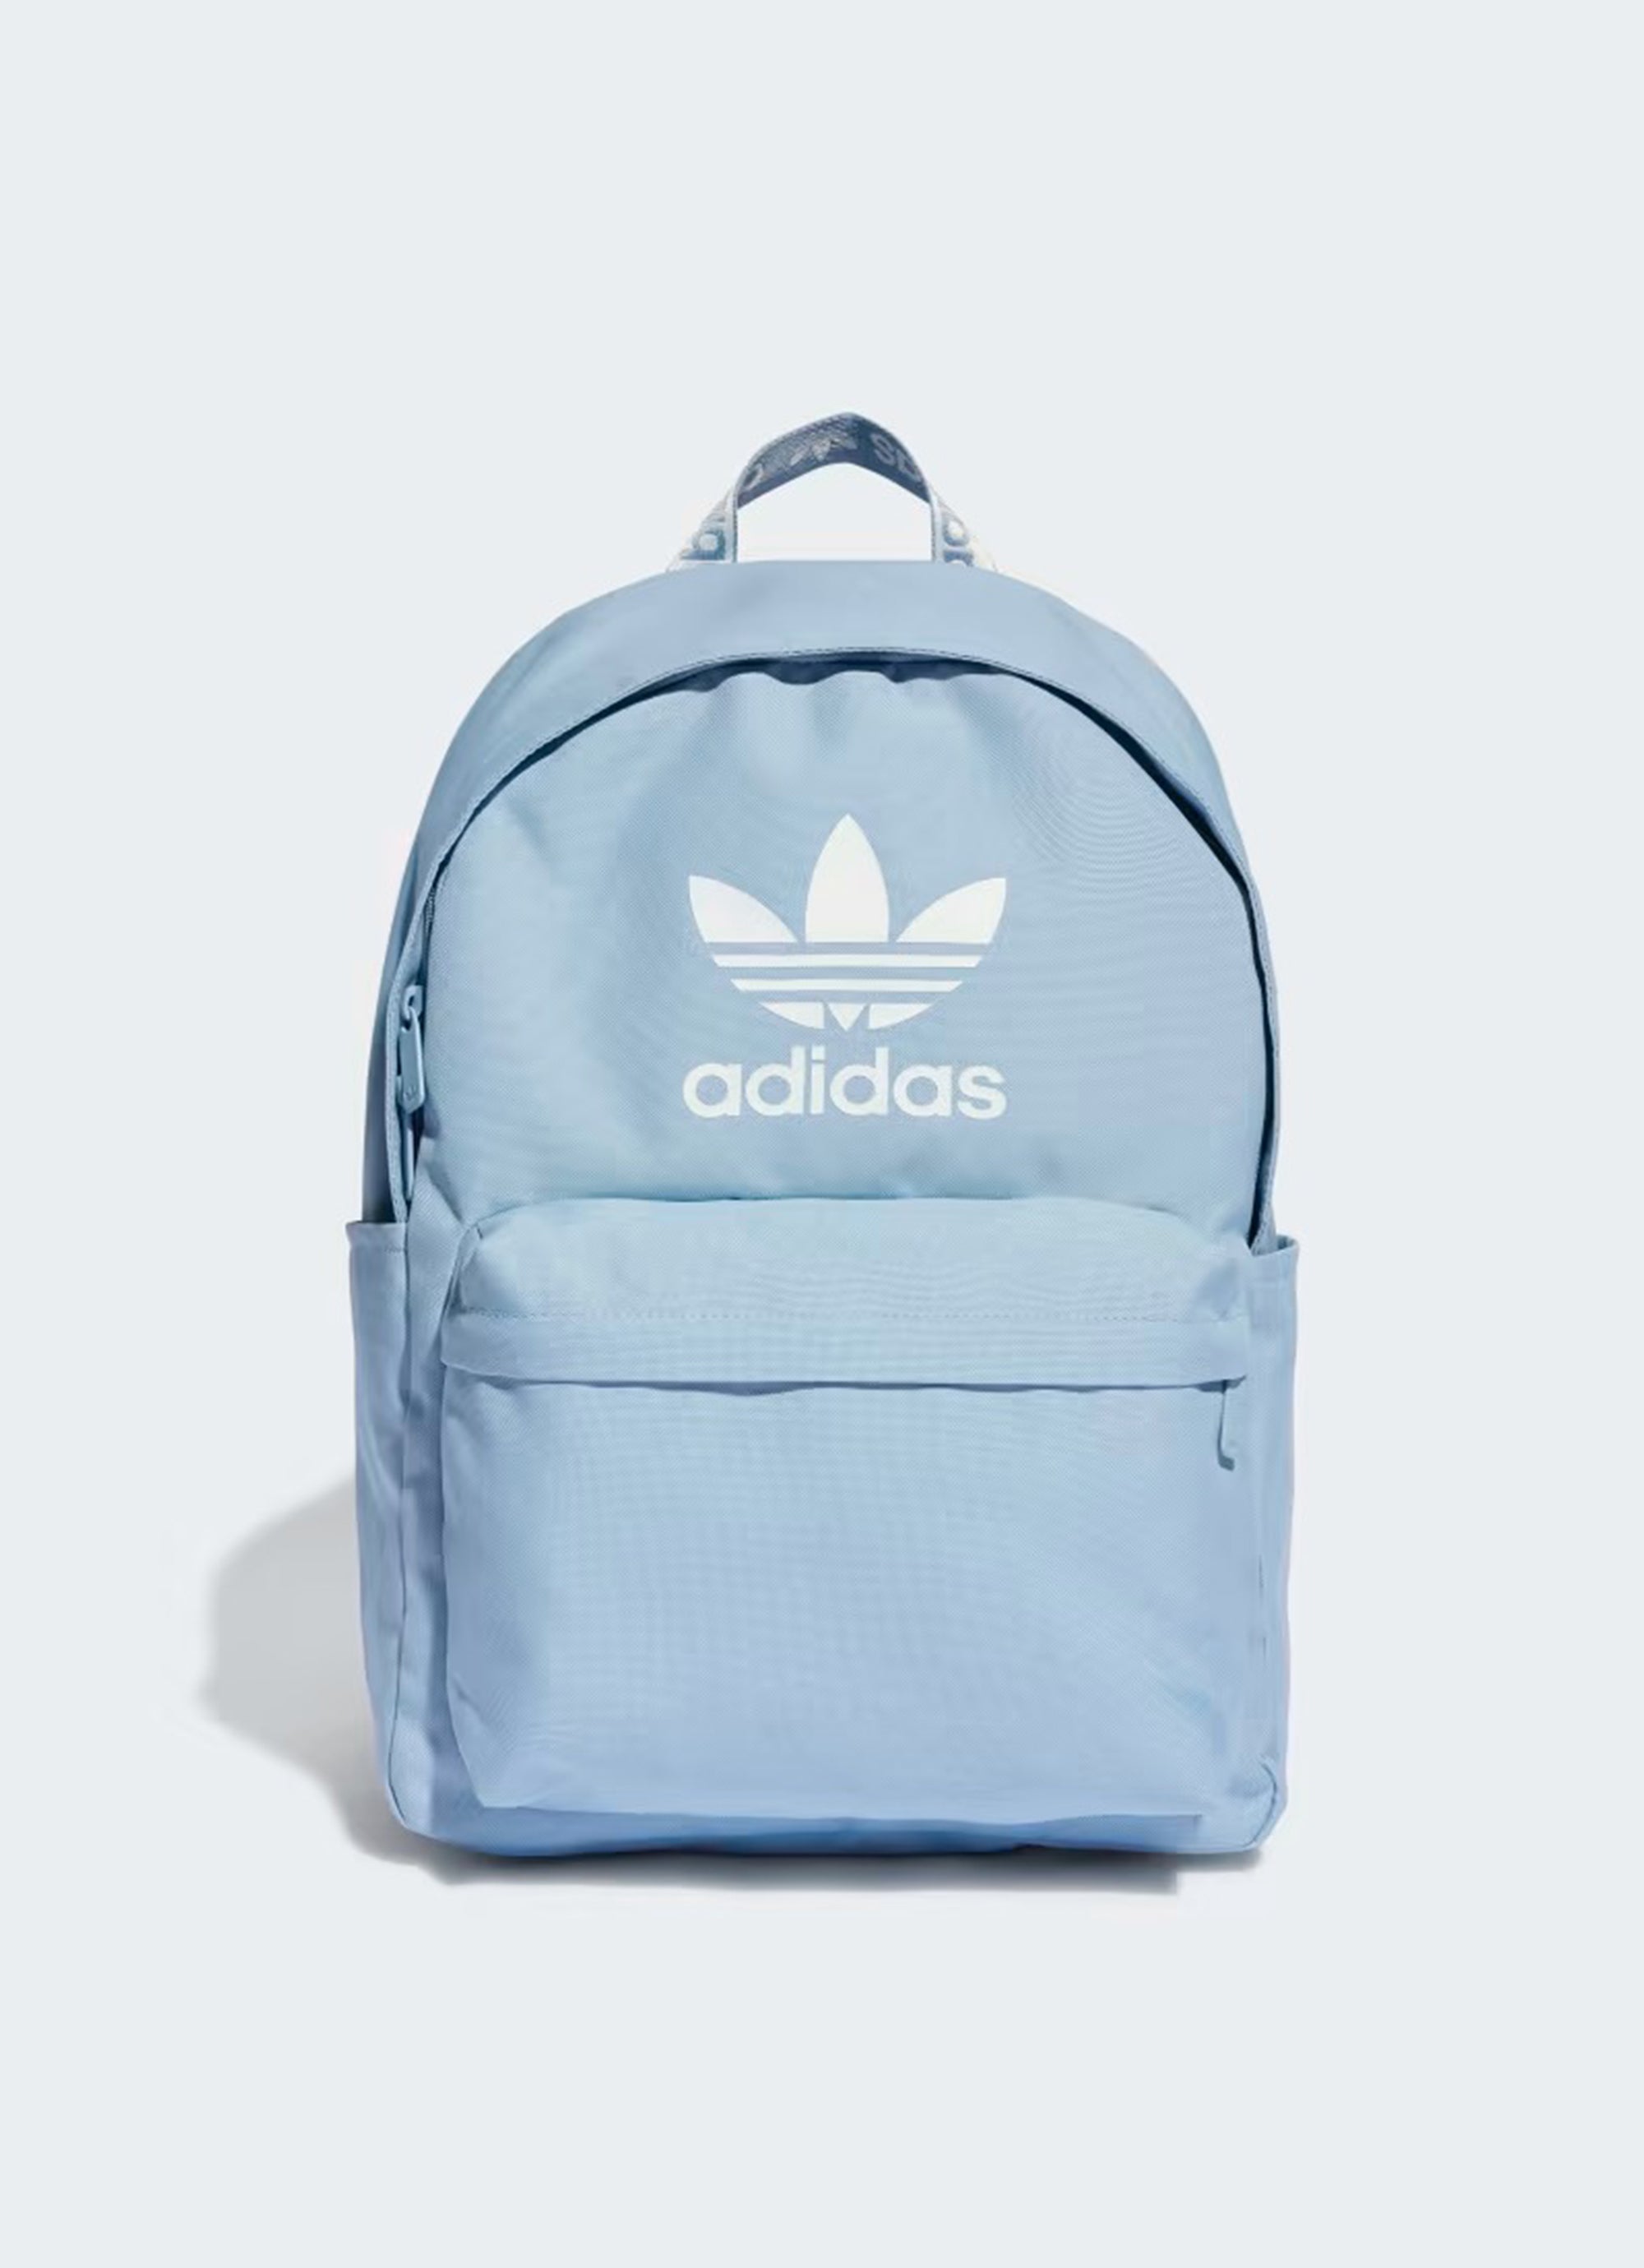 Adidas Originals Bag - Etsy UK